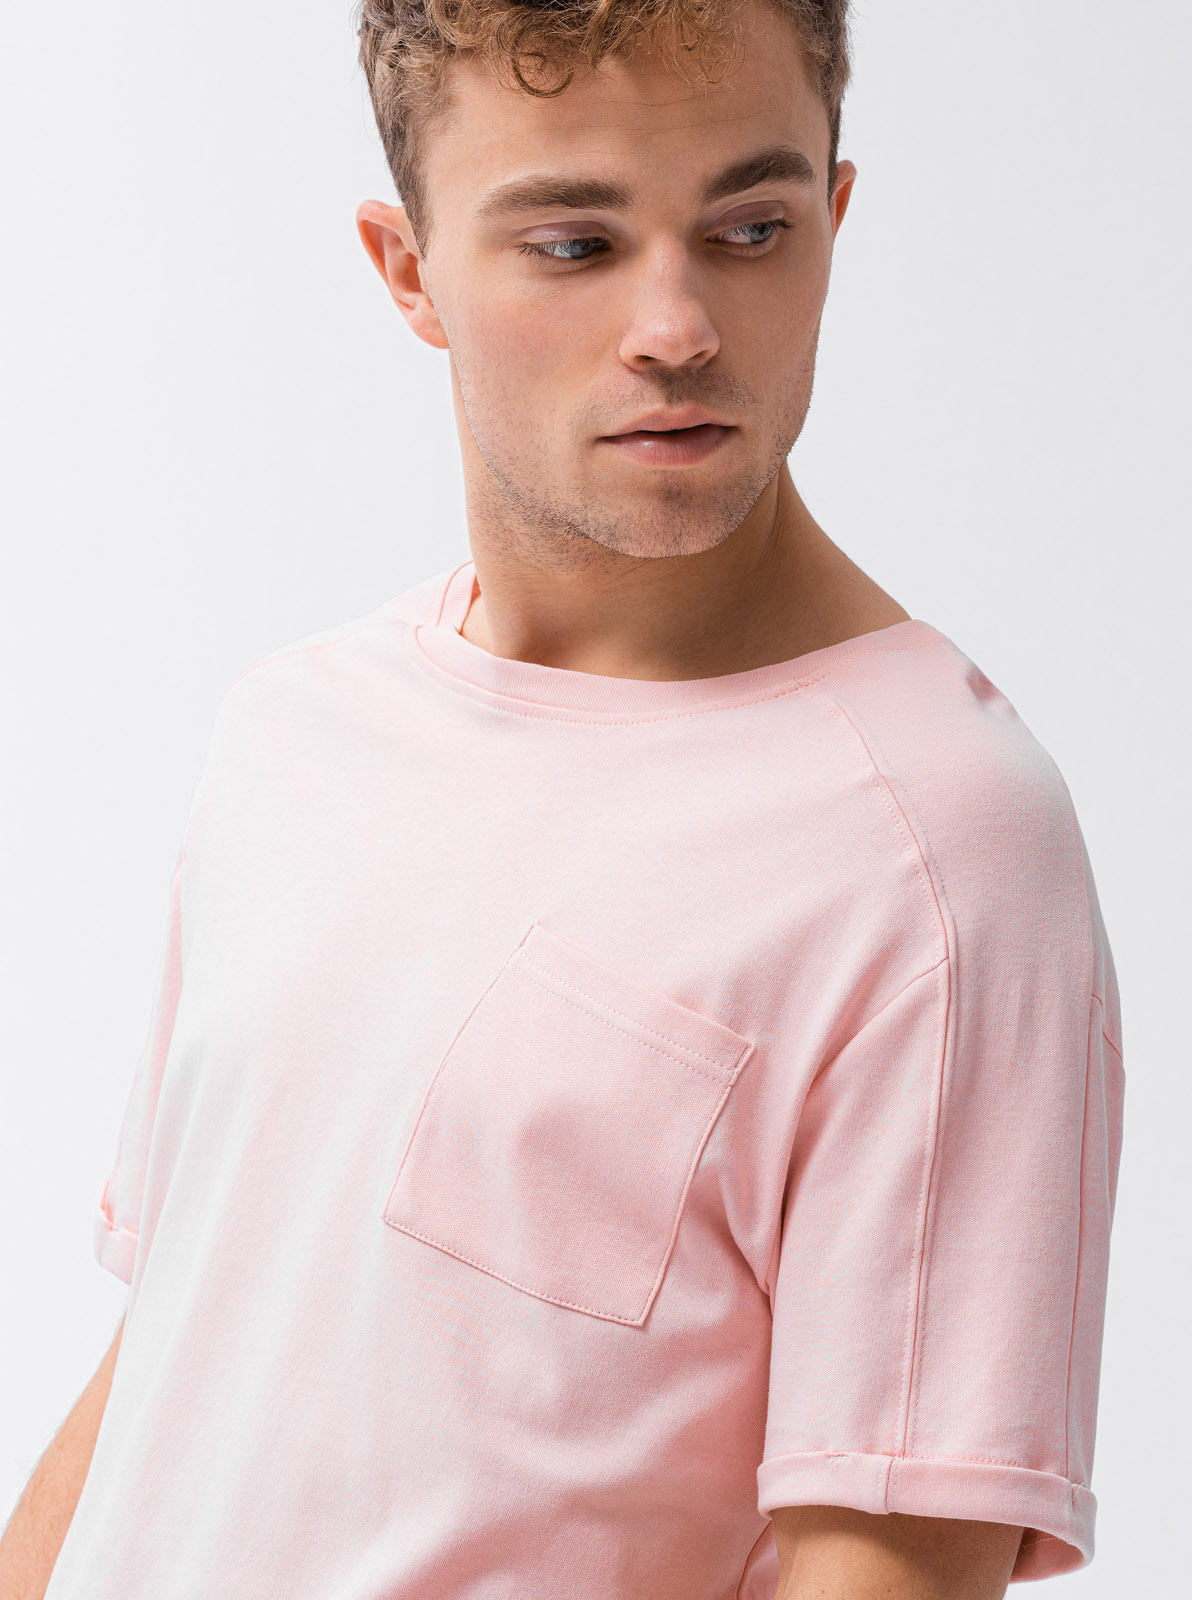 hot pink t shirt mens